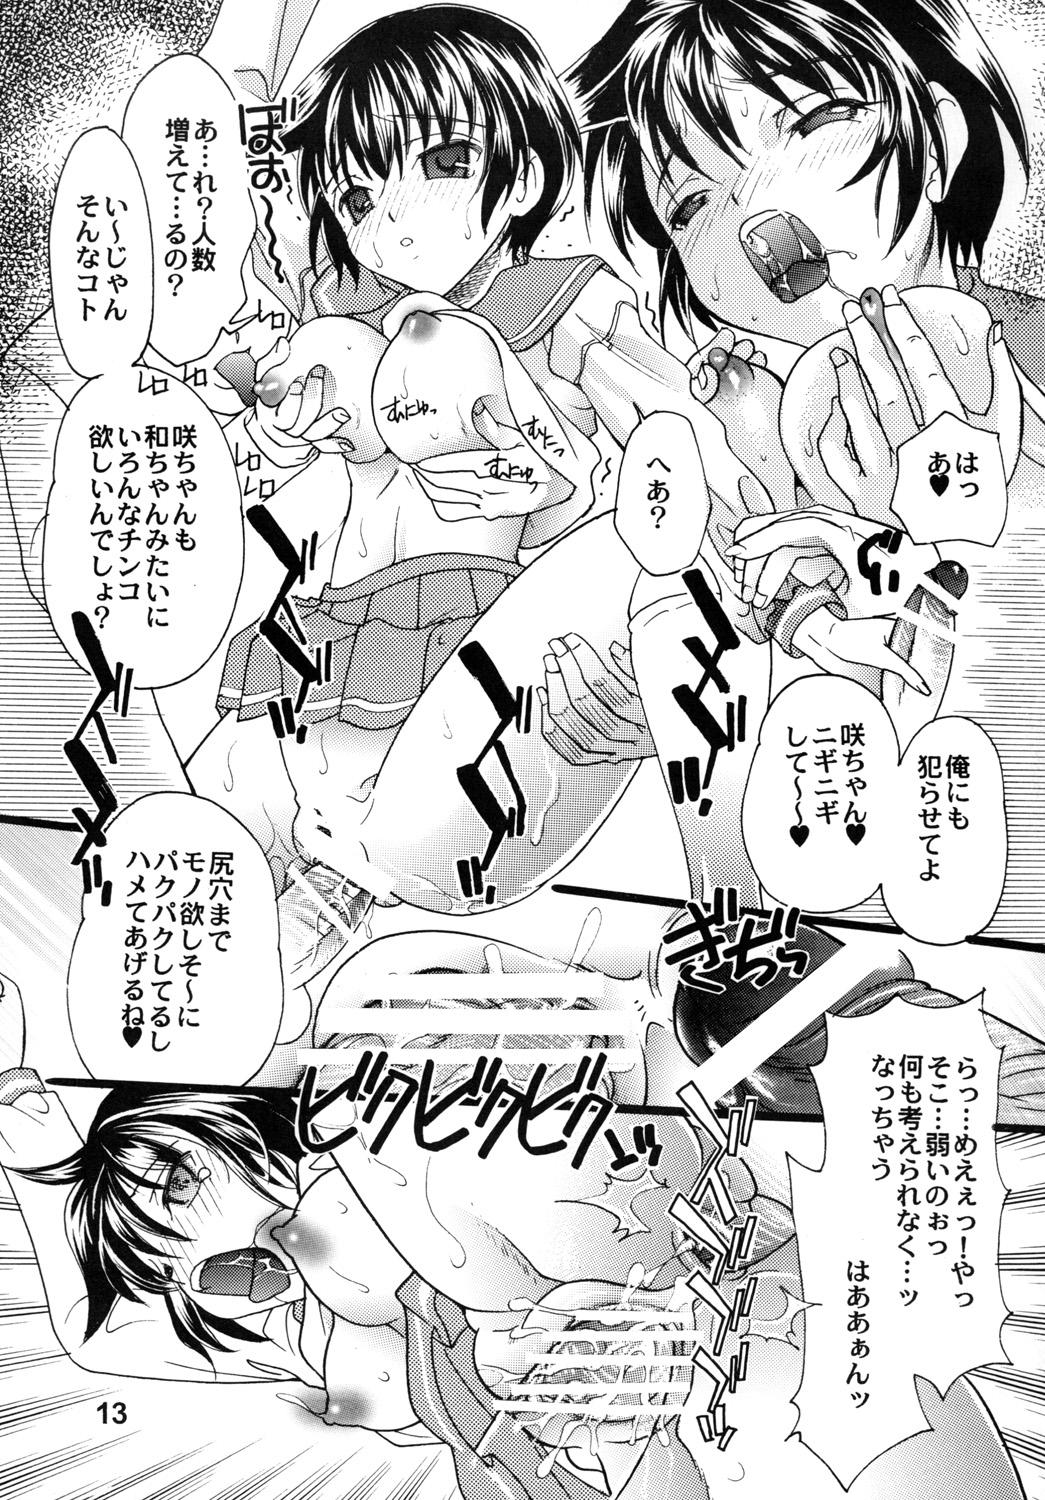 Stripping Saki ! Ran 2 - Saki Soapy - Page 12